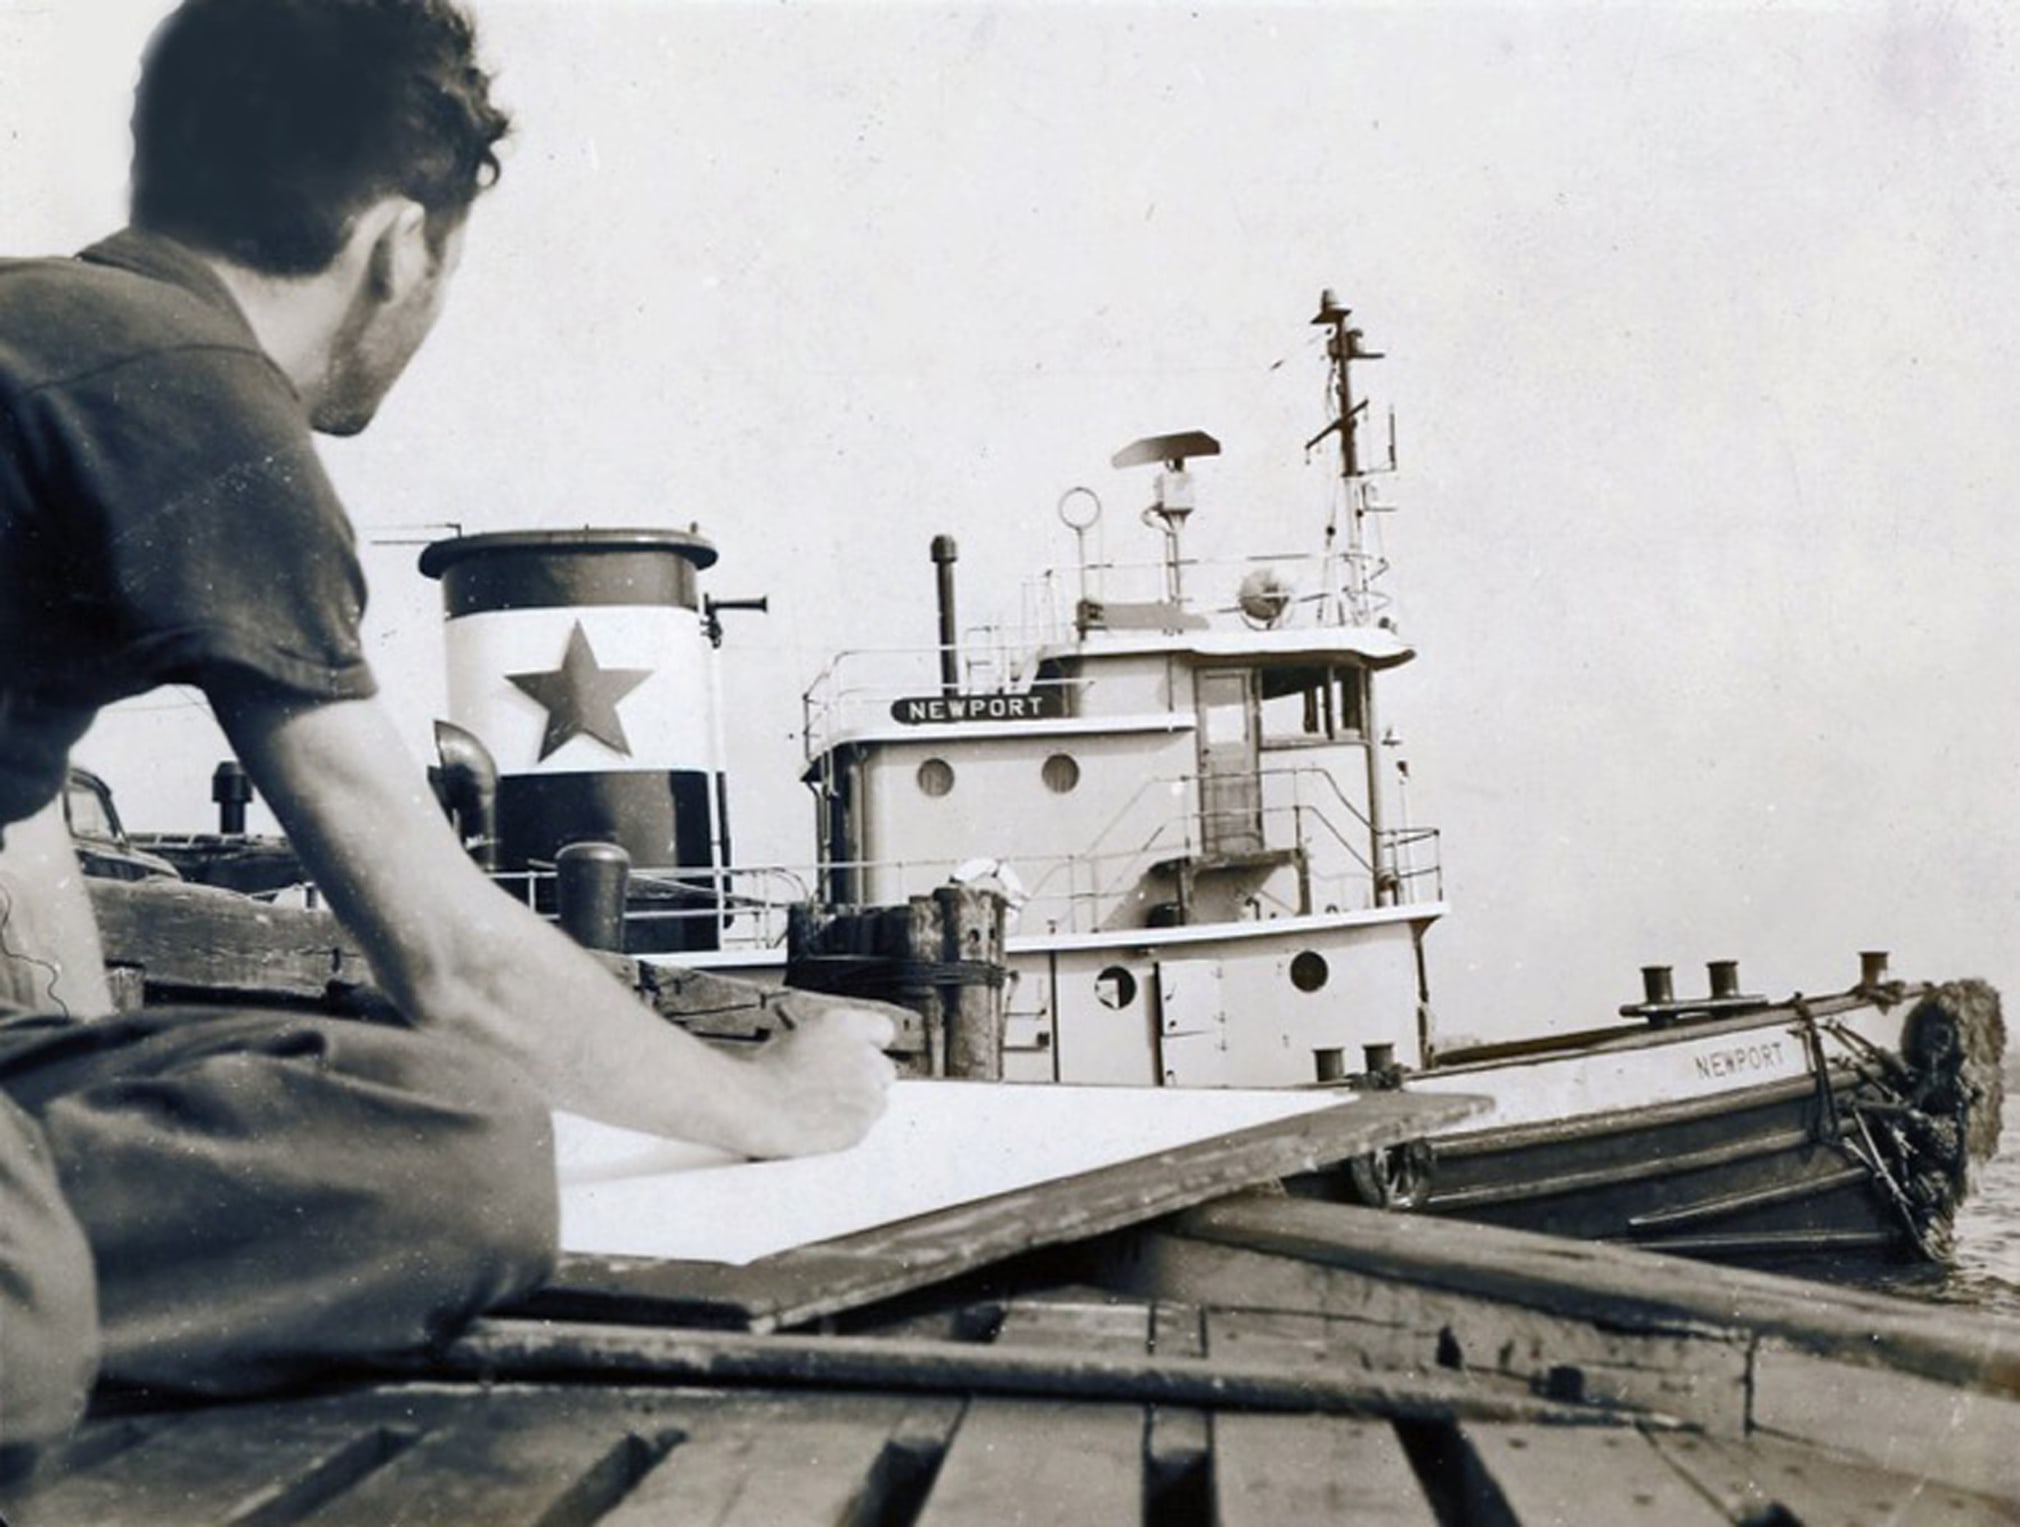 Robert Indiana drawing the tugboat Newport, 1956. Photo: Jack Youngerman